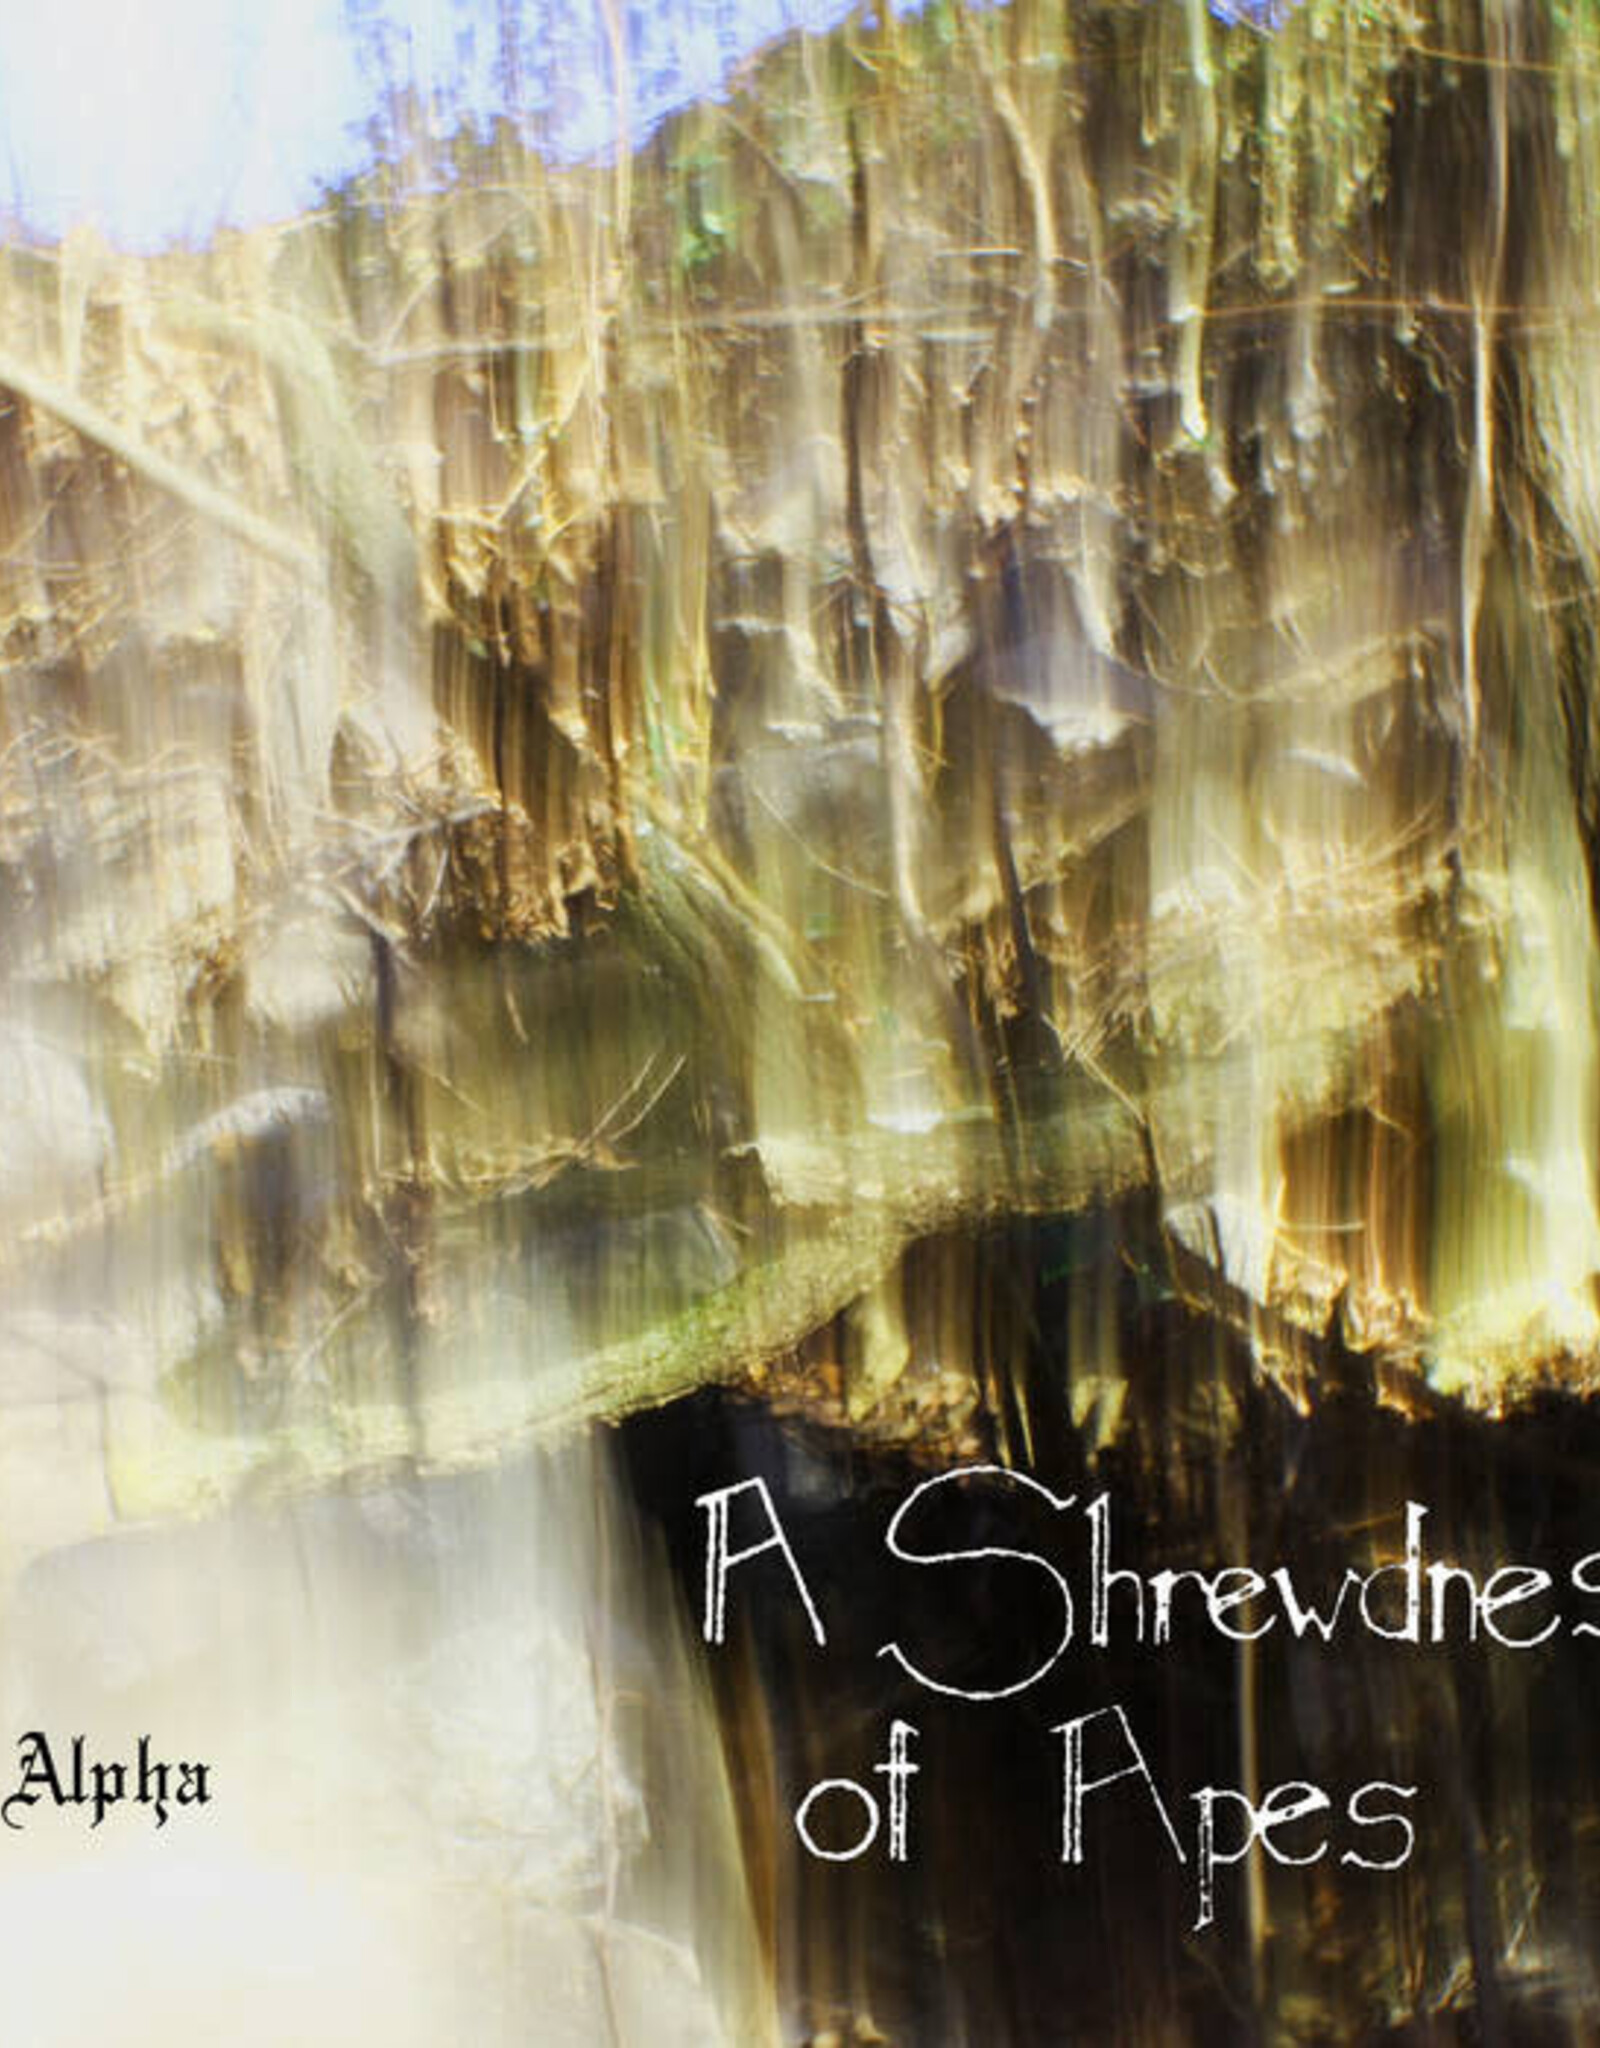 A Shrewdness of Apes - Alpha EP (CD)